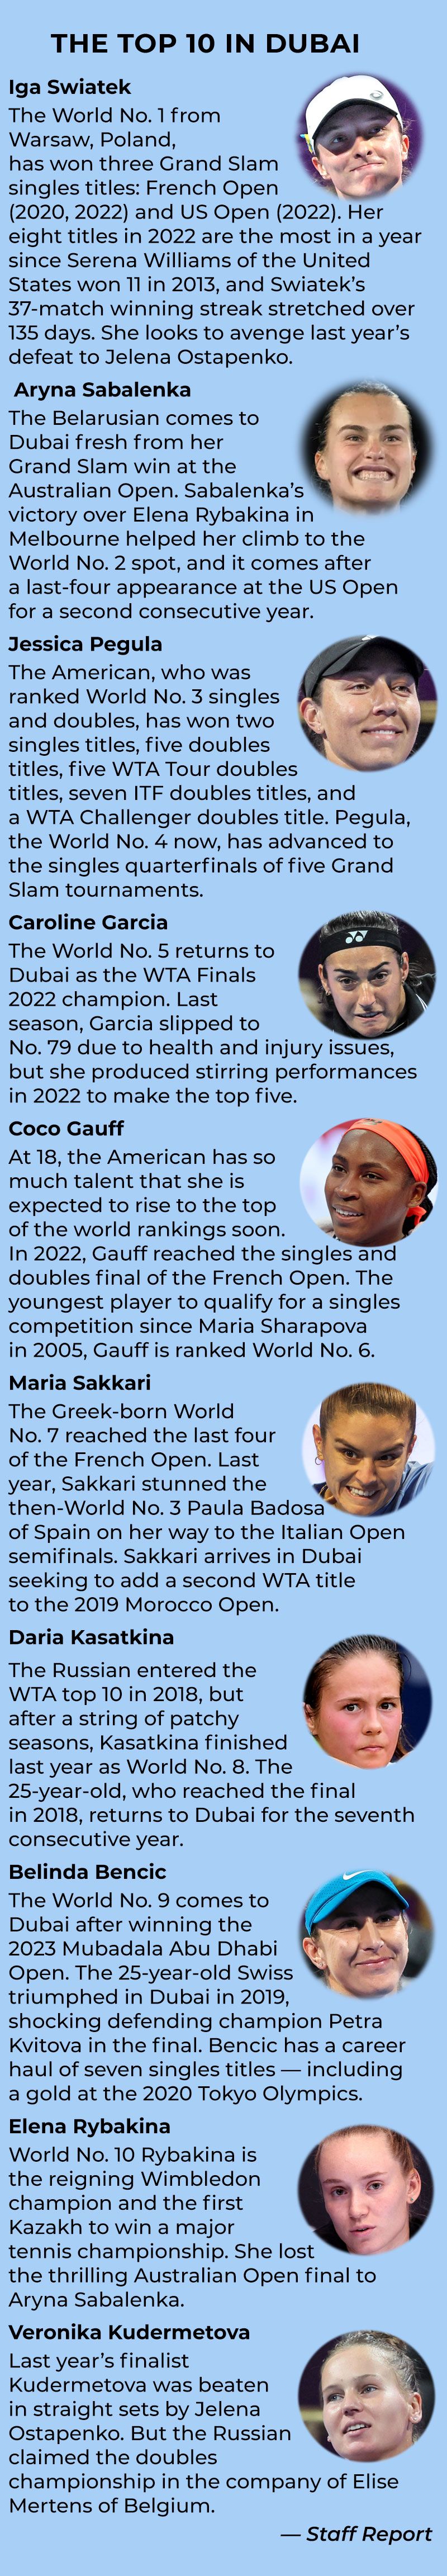 Dubai tennis _ Top 10 Updated